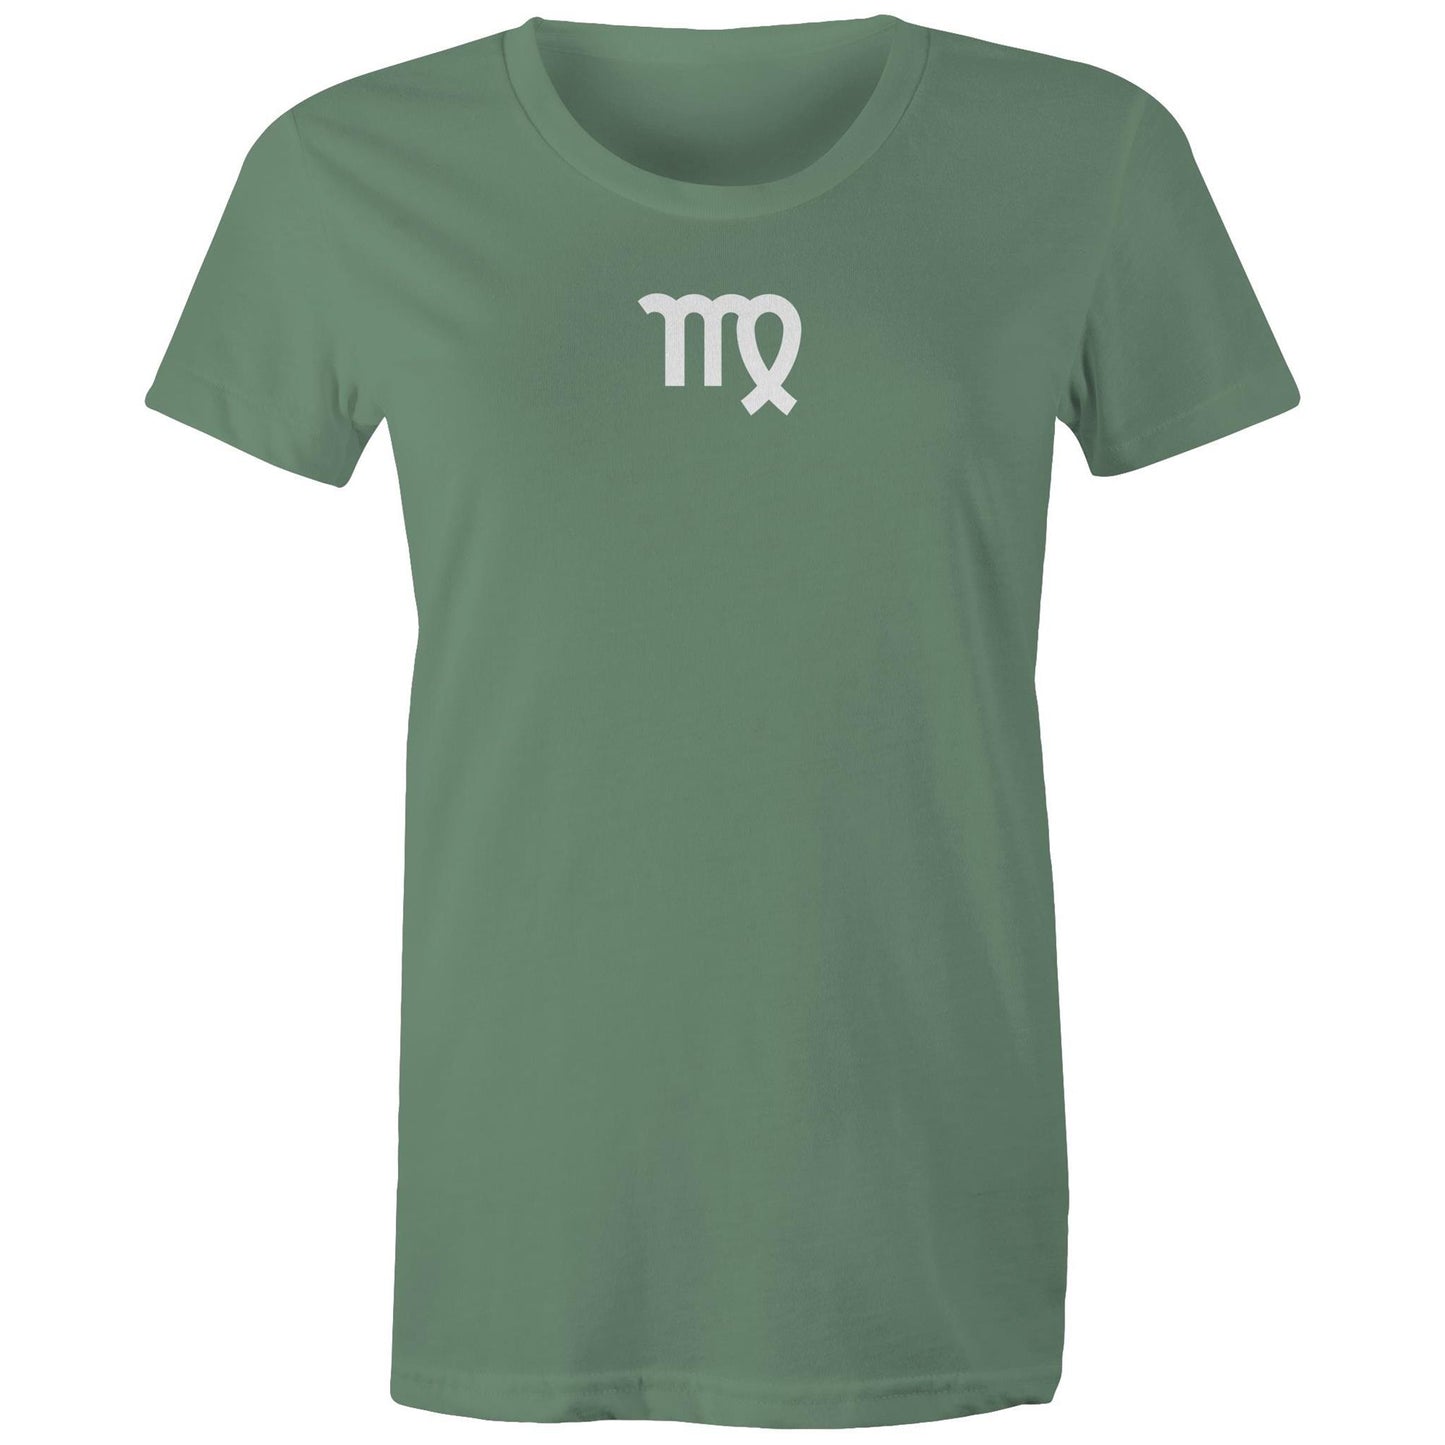 Virgo T Shirts for Women